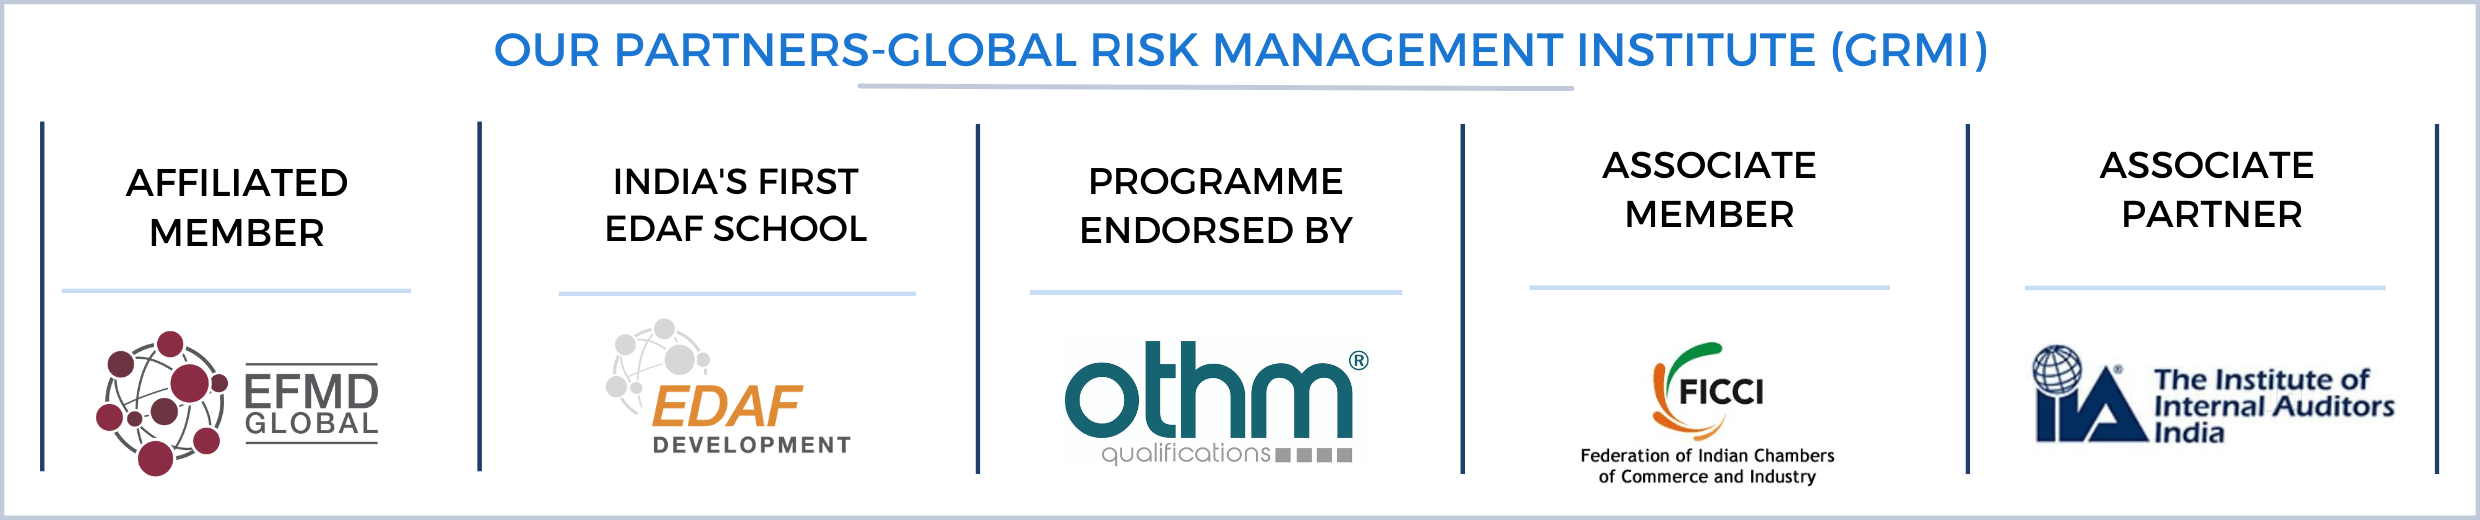 Our Partners - GRMI Global Risk Management Instittute